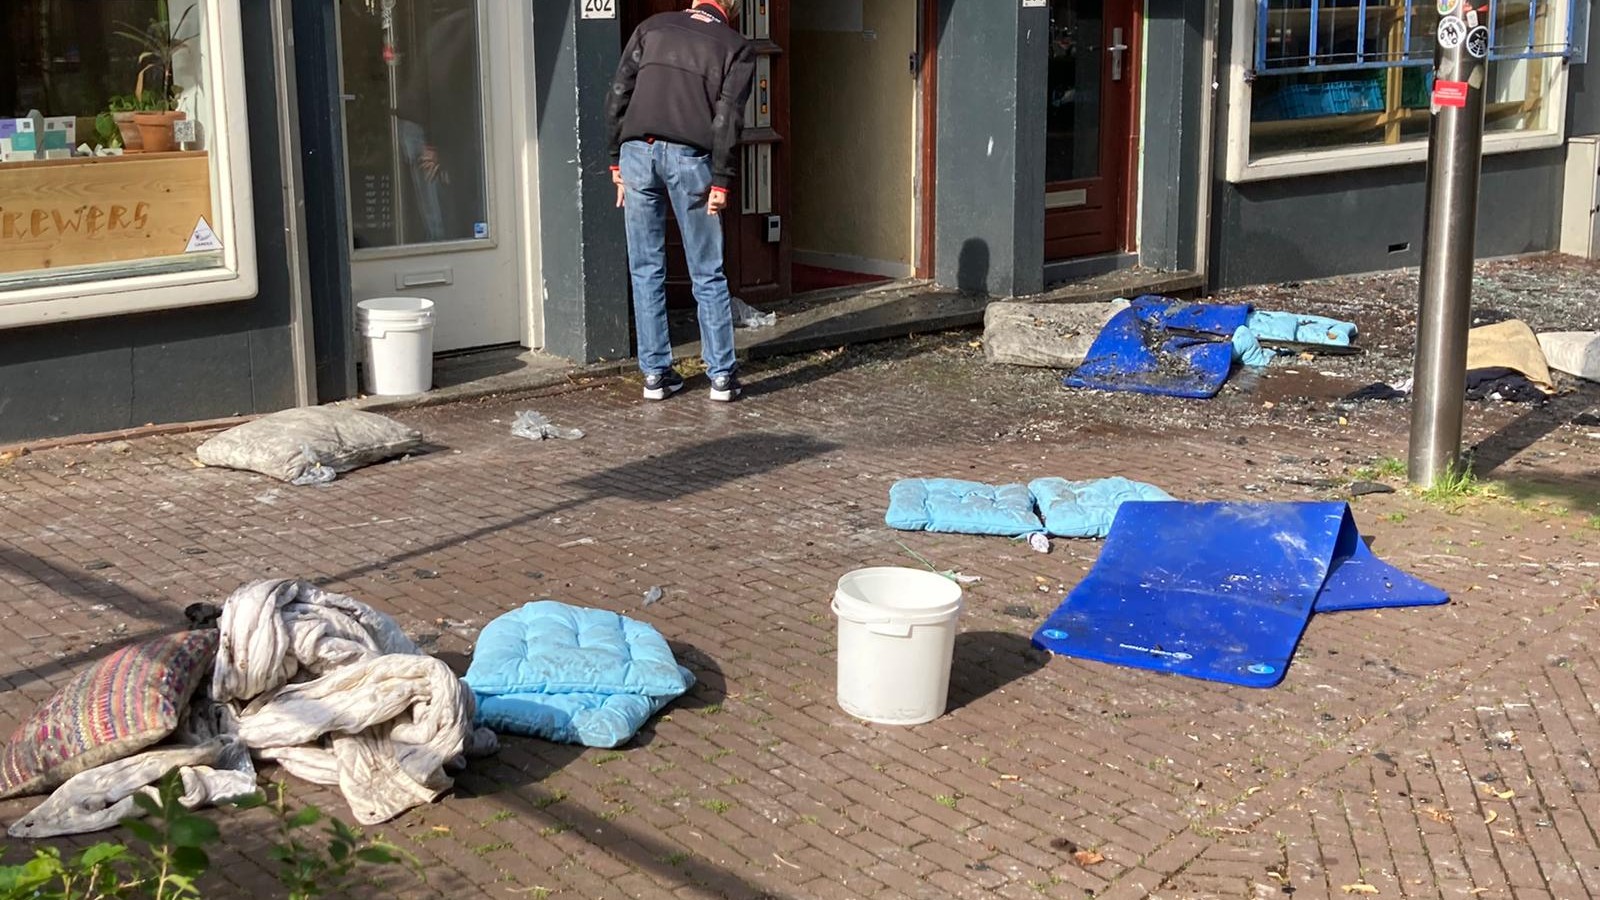 Tweetal ernstig gewond na sprong uit raam bij uitslaande brand Van Hallstraat